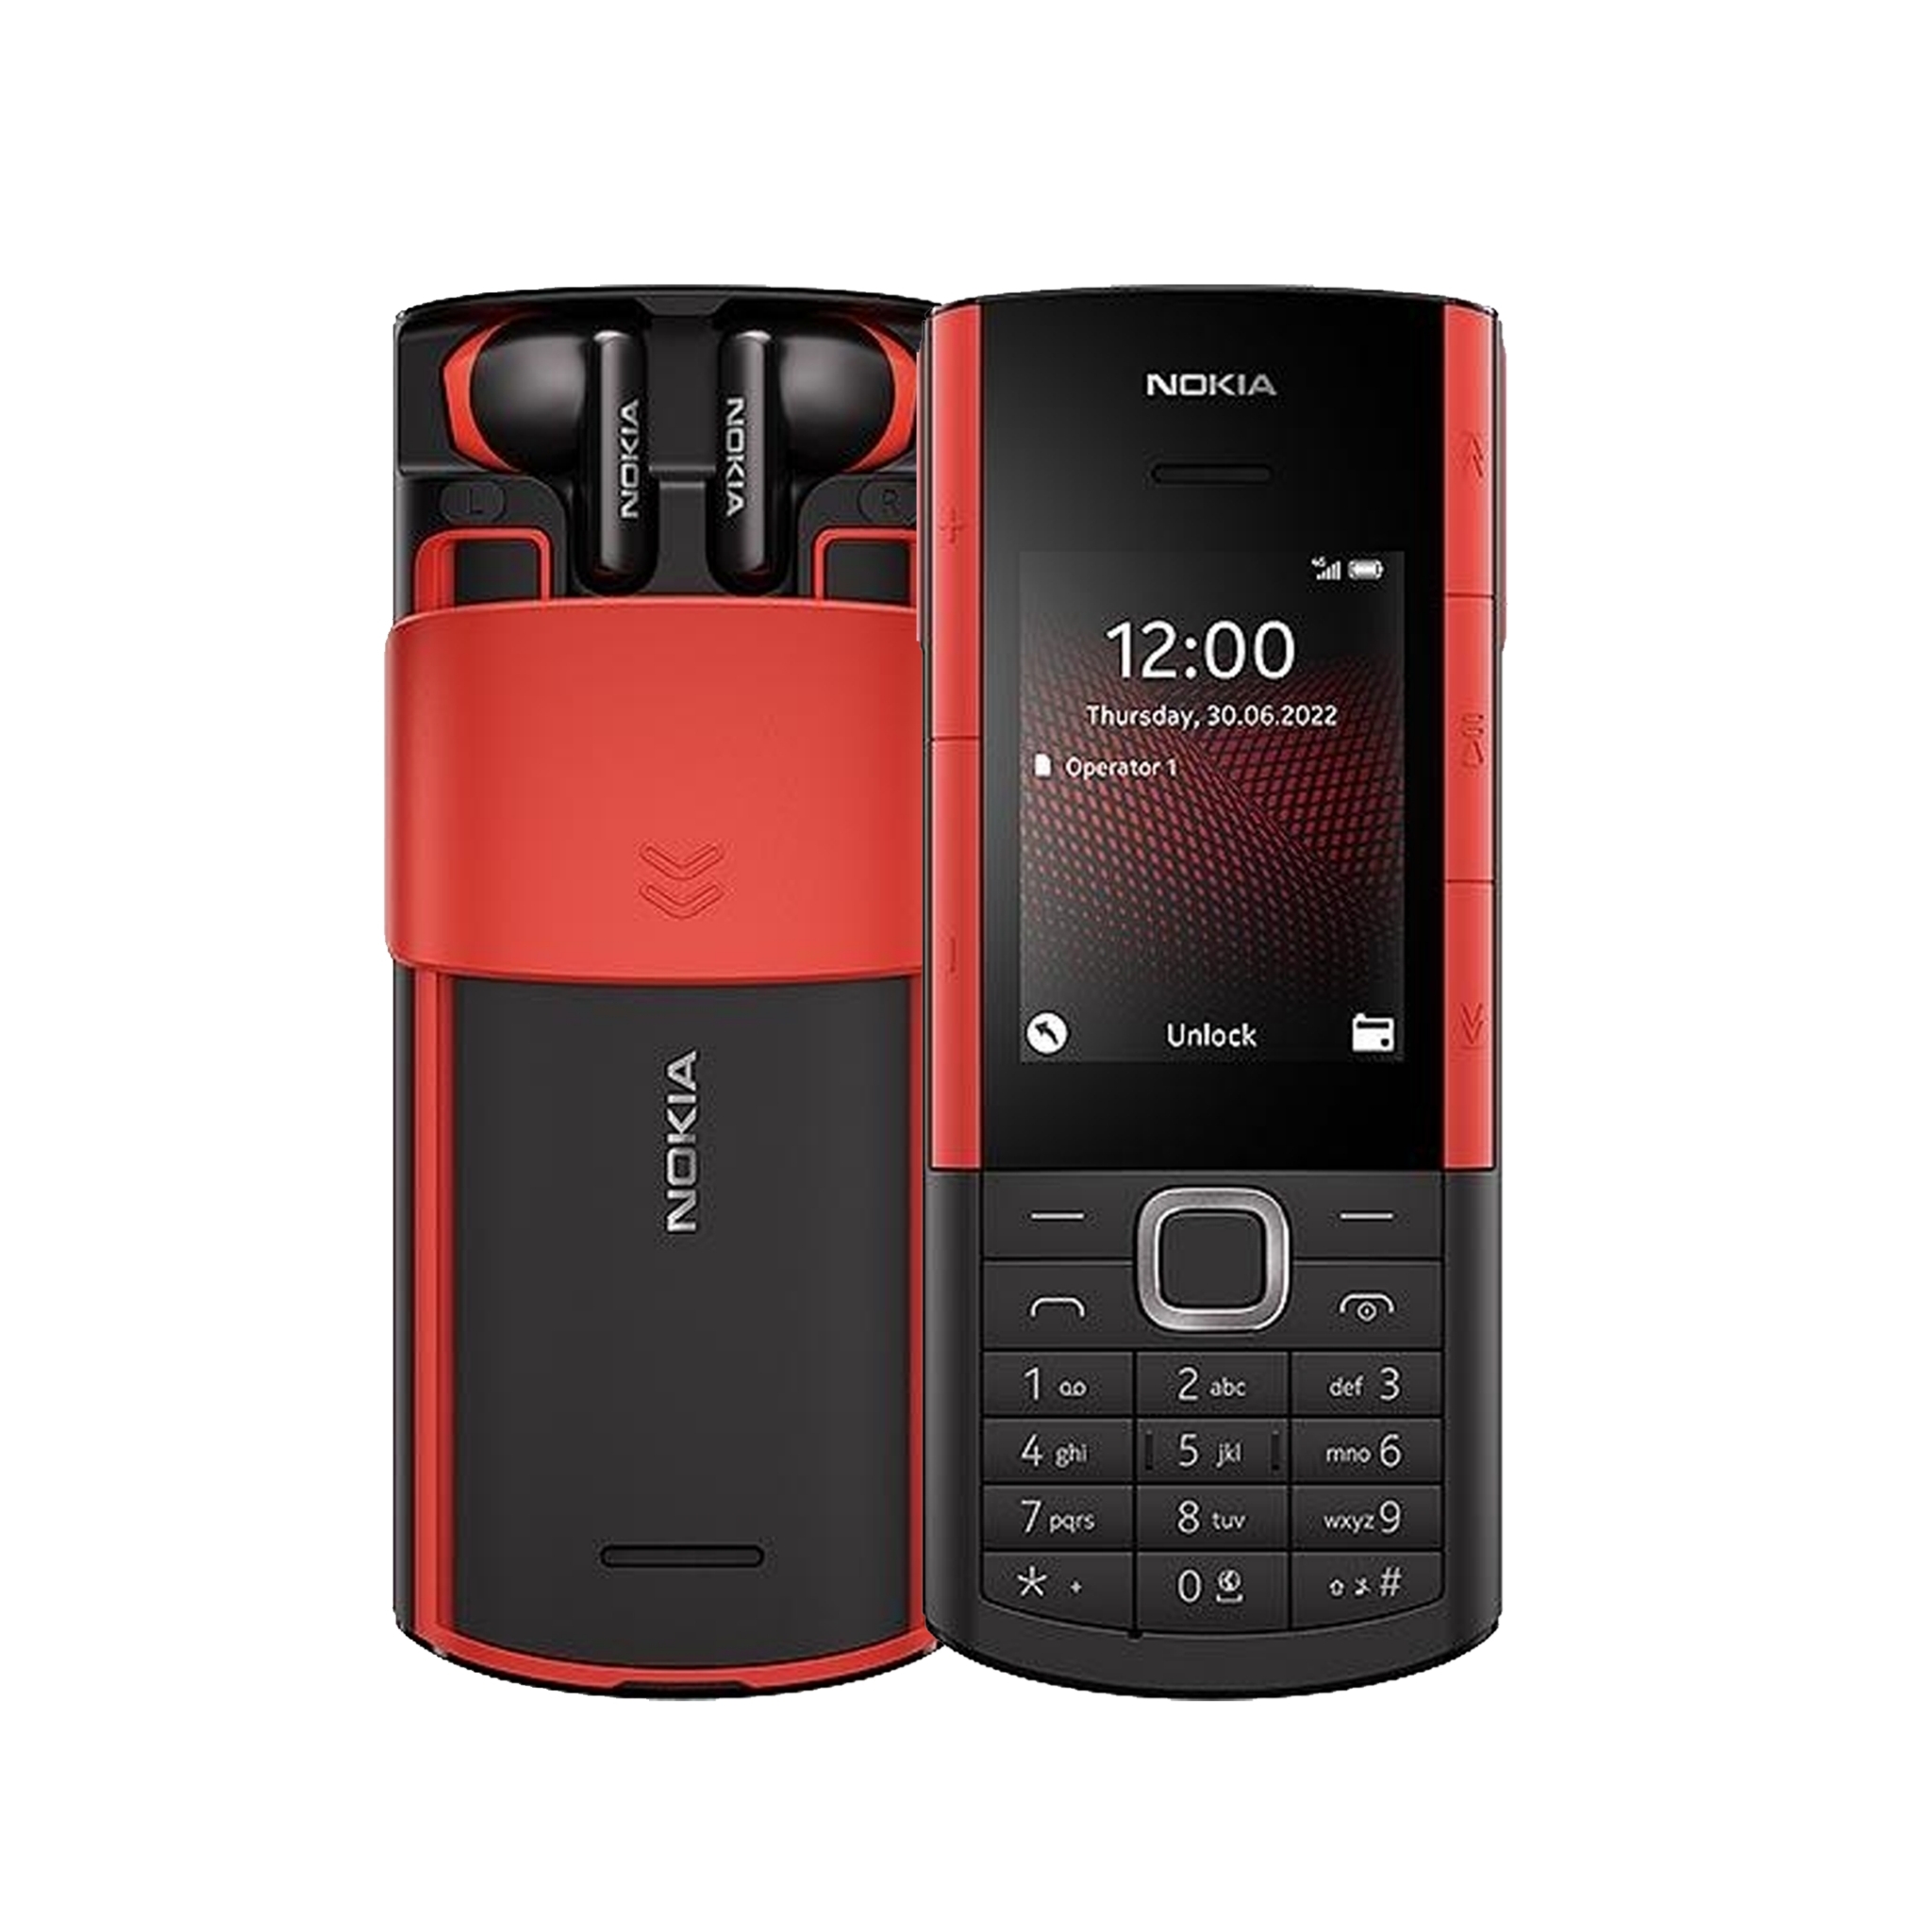 5710 xpress audio. Нокиа 2660. Nokia 2660. Nokia 5710 Xpress Audio купить.